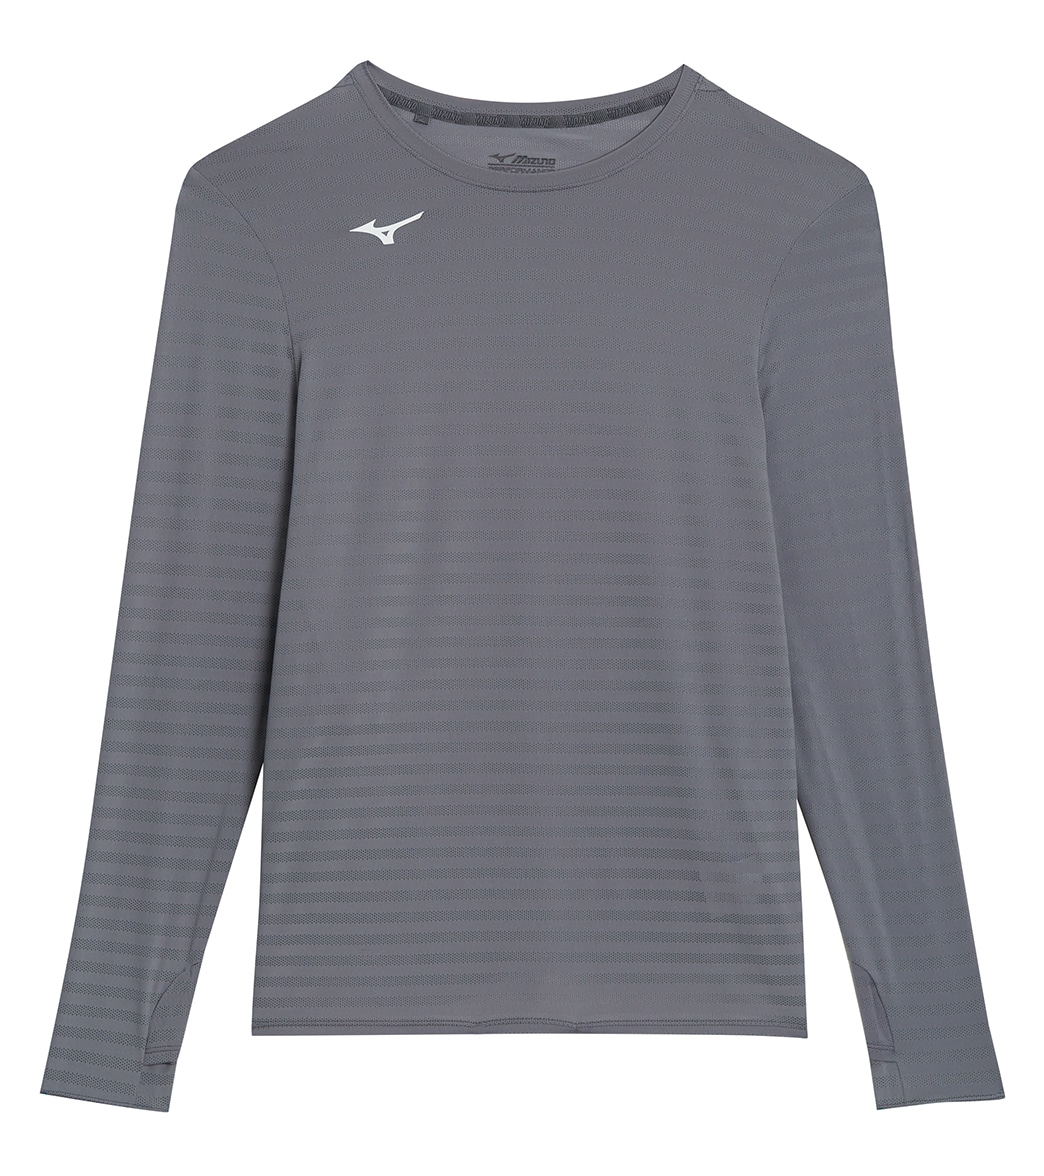 Mizuno Men's Athletic Eco Long Sleeve Top Shirt - Dark Grey Large - Swimoutlet.com